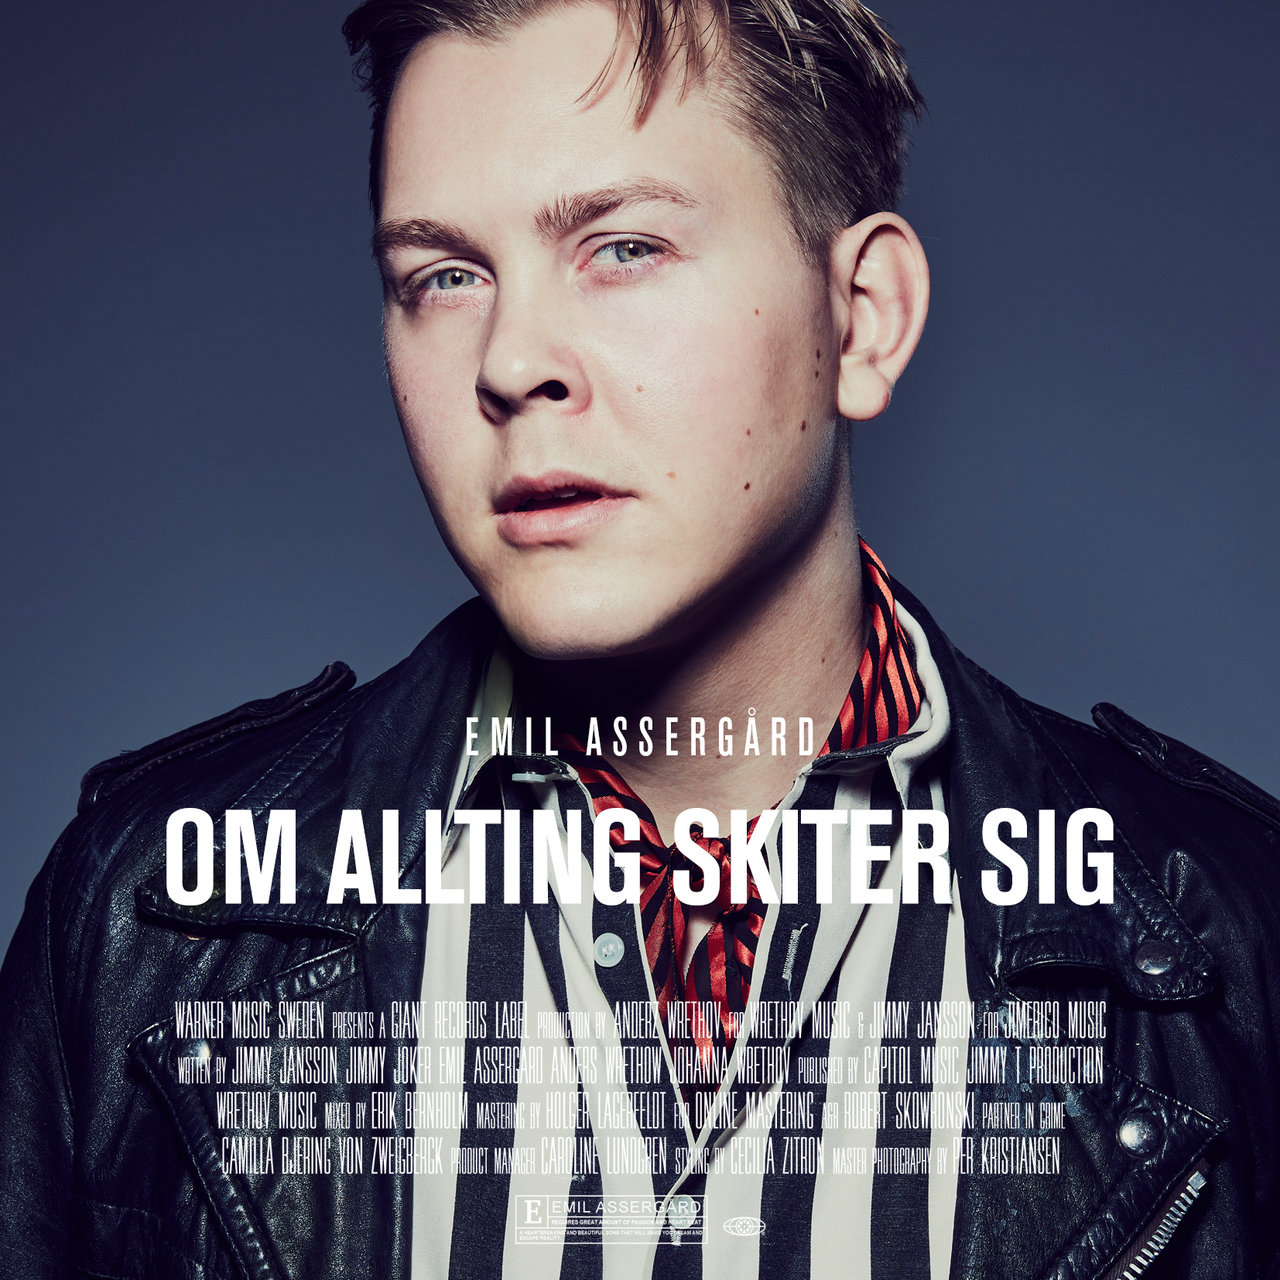 Emil Assergård Om allting skiter sig cover artwork